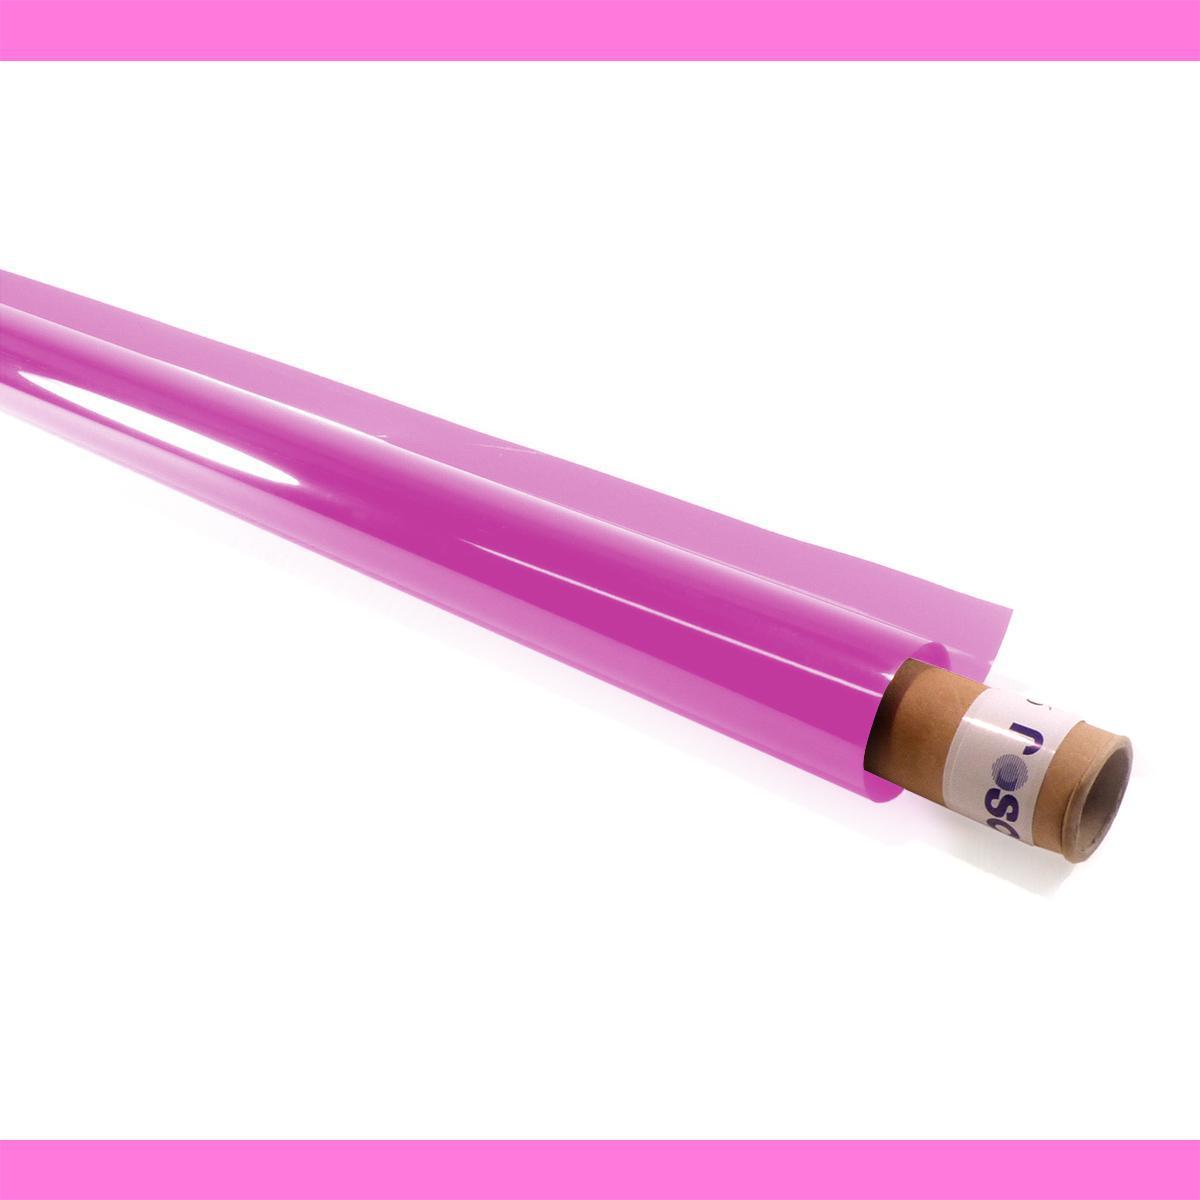 An image of 002 Rose Pink Lighting Gel Roll